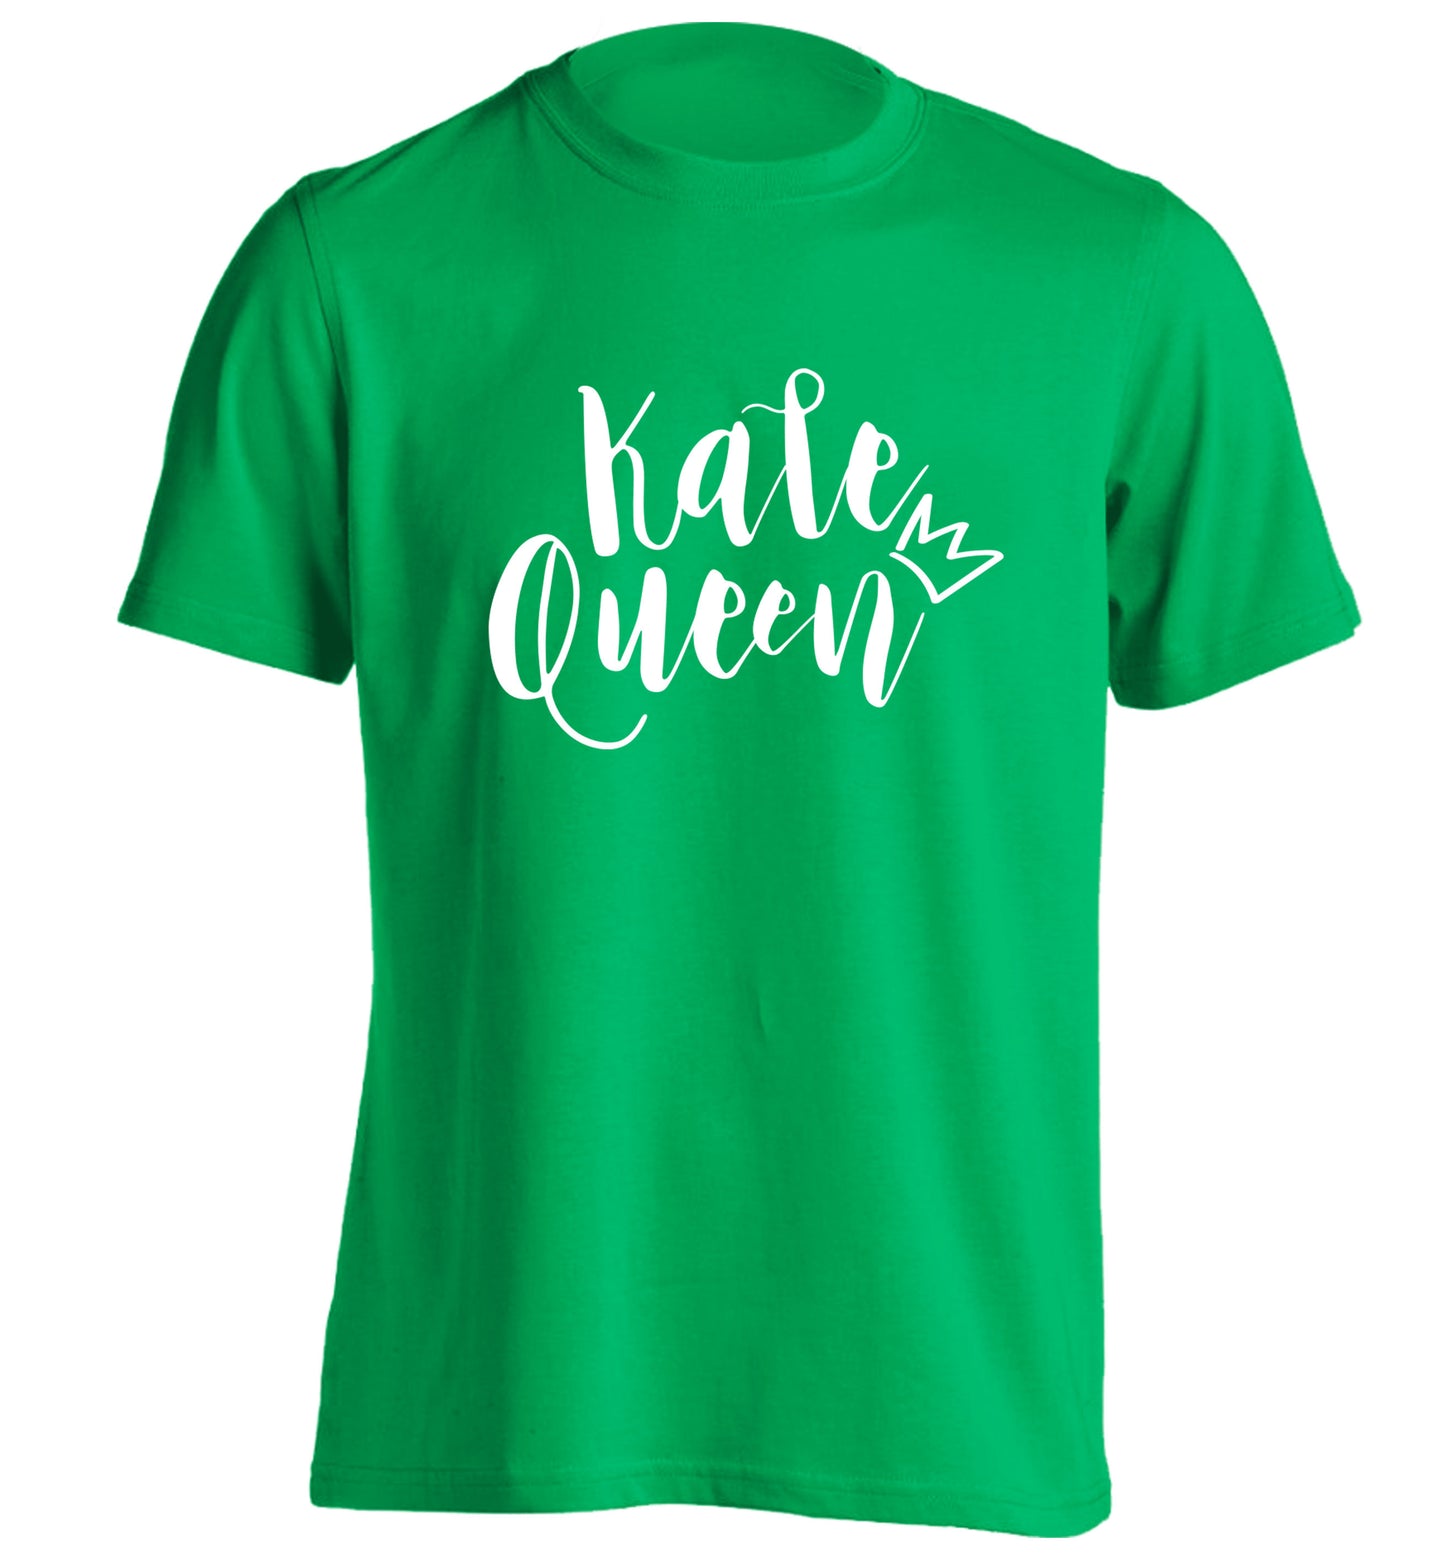 Kale Queen adults unisex green Tshirt 2XL